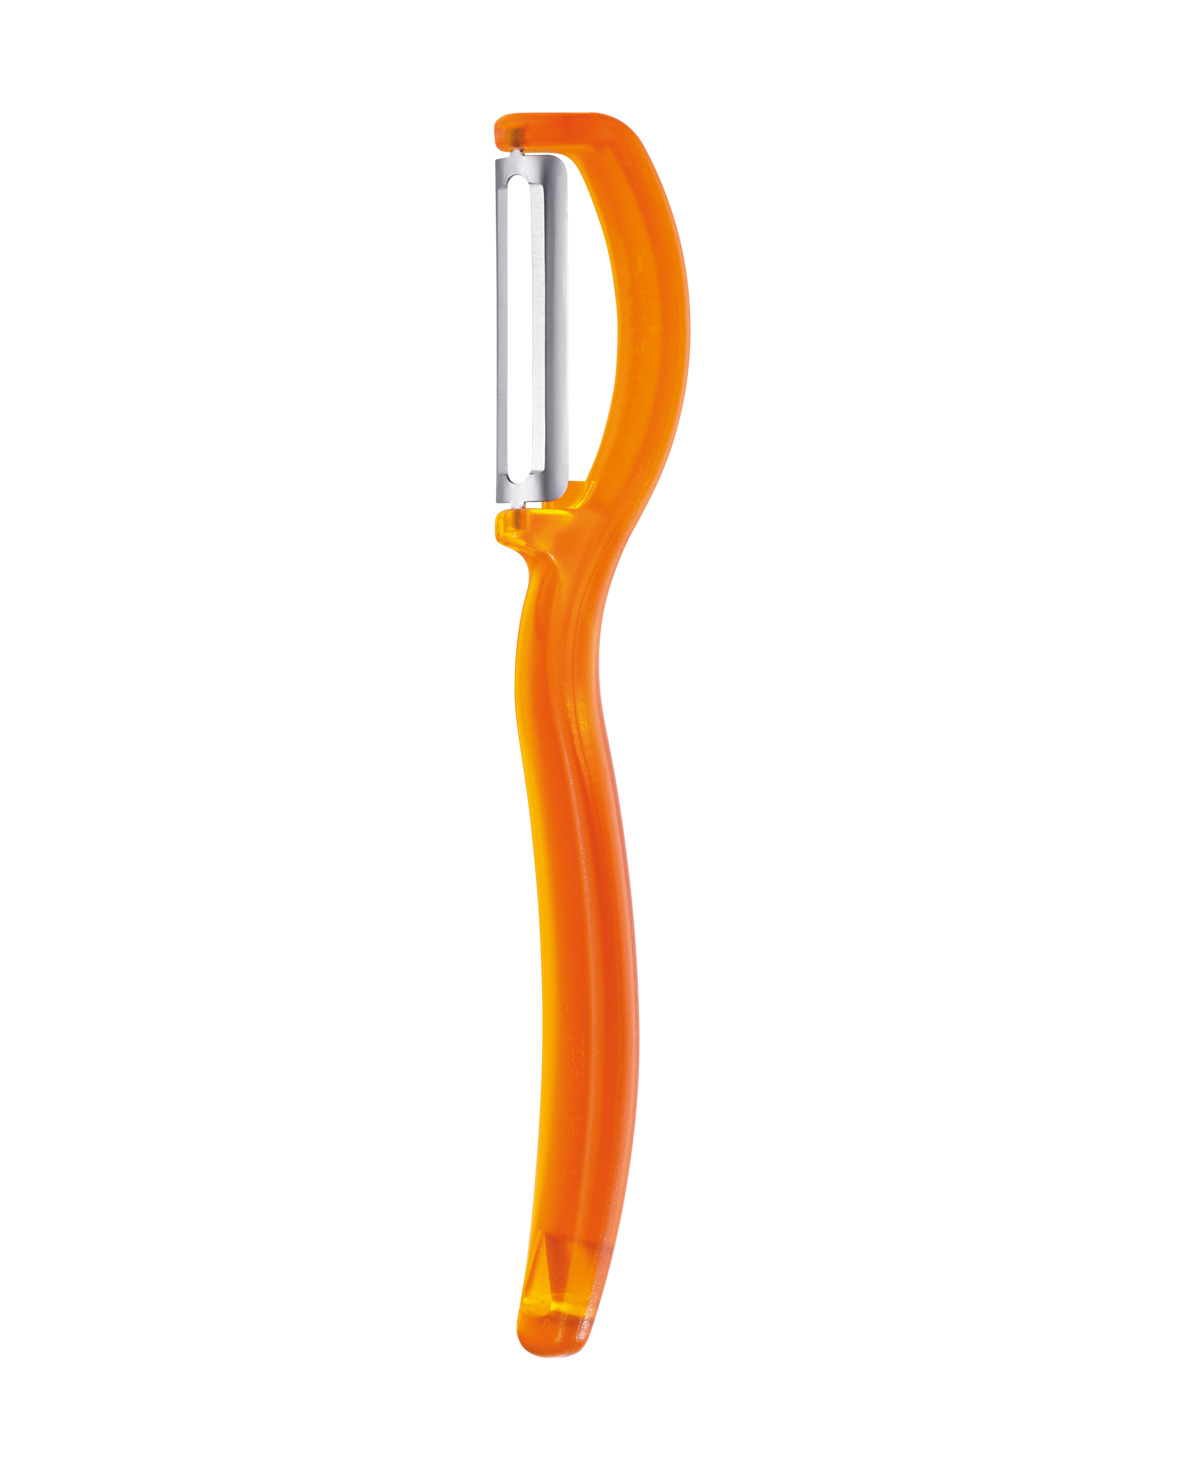 triangle universal swivel peeler with straight blade and orange handle